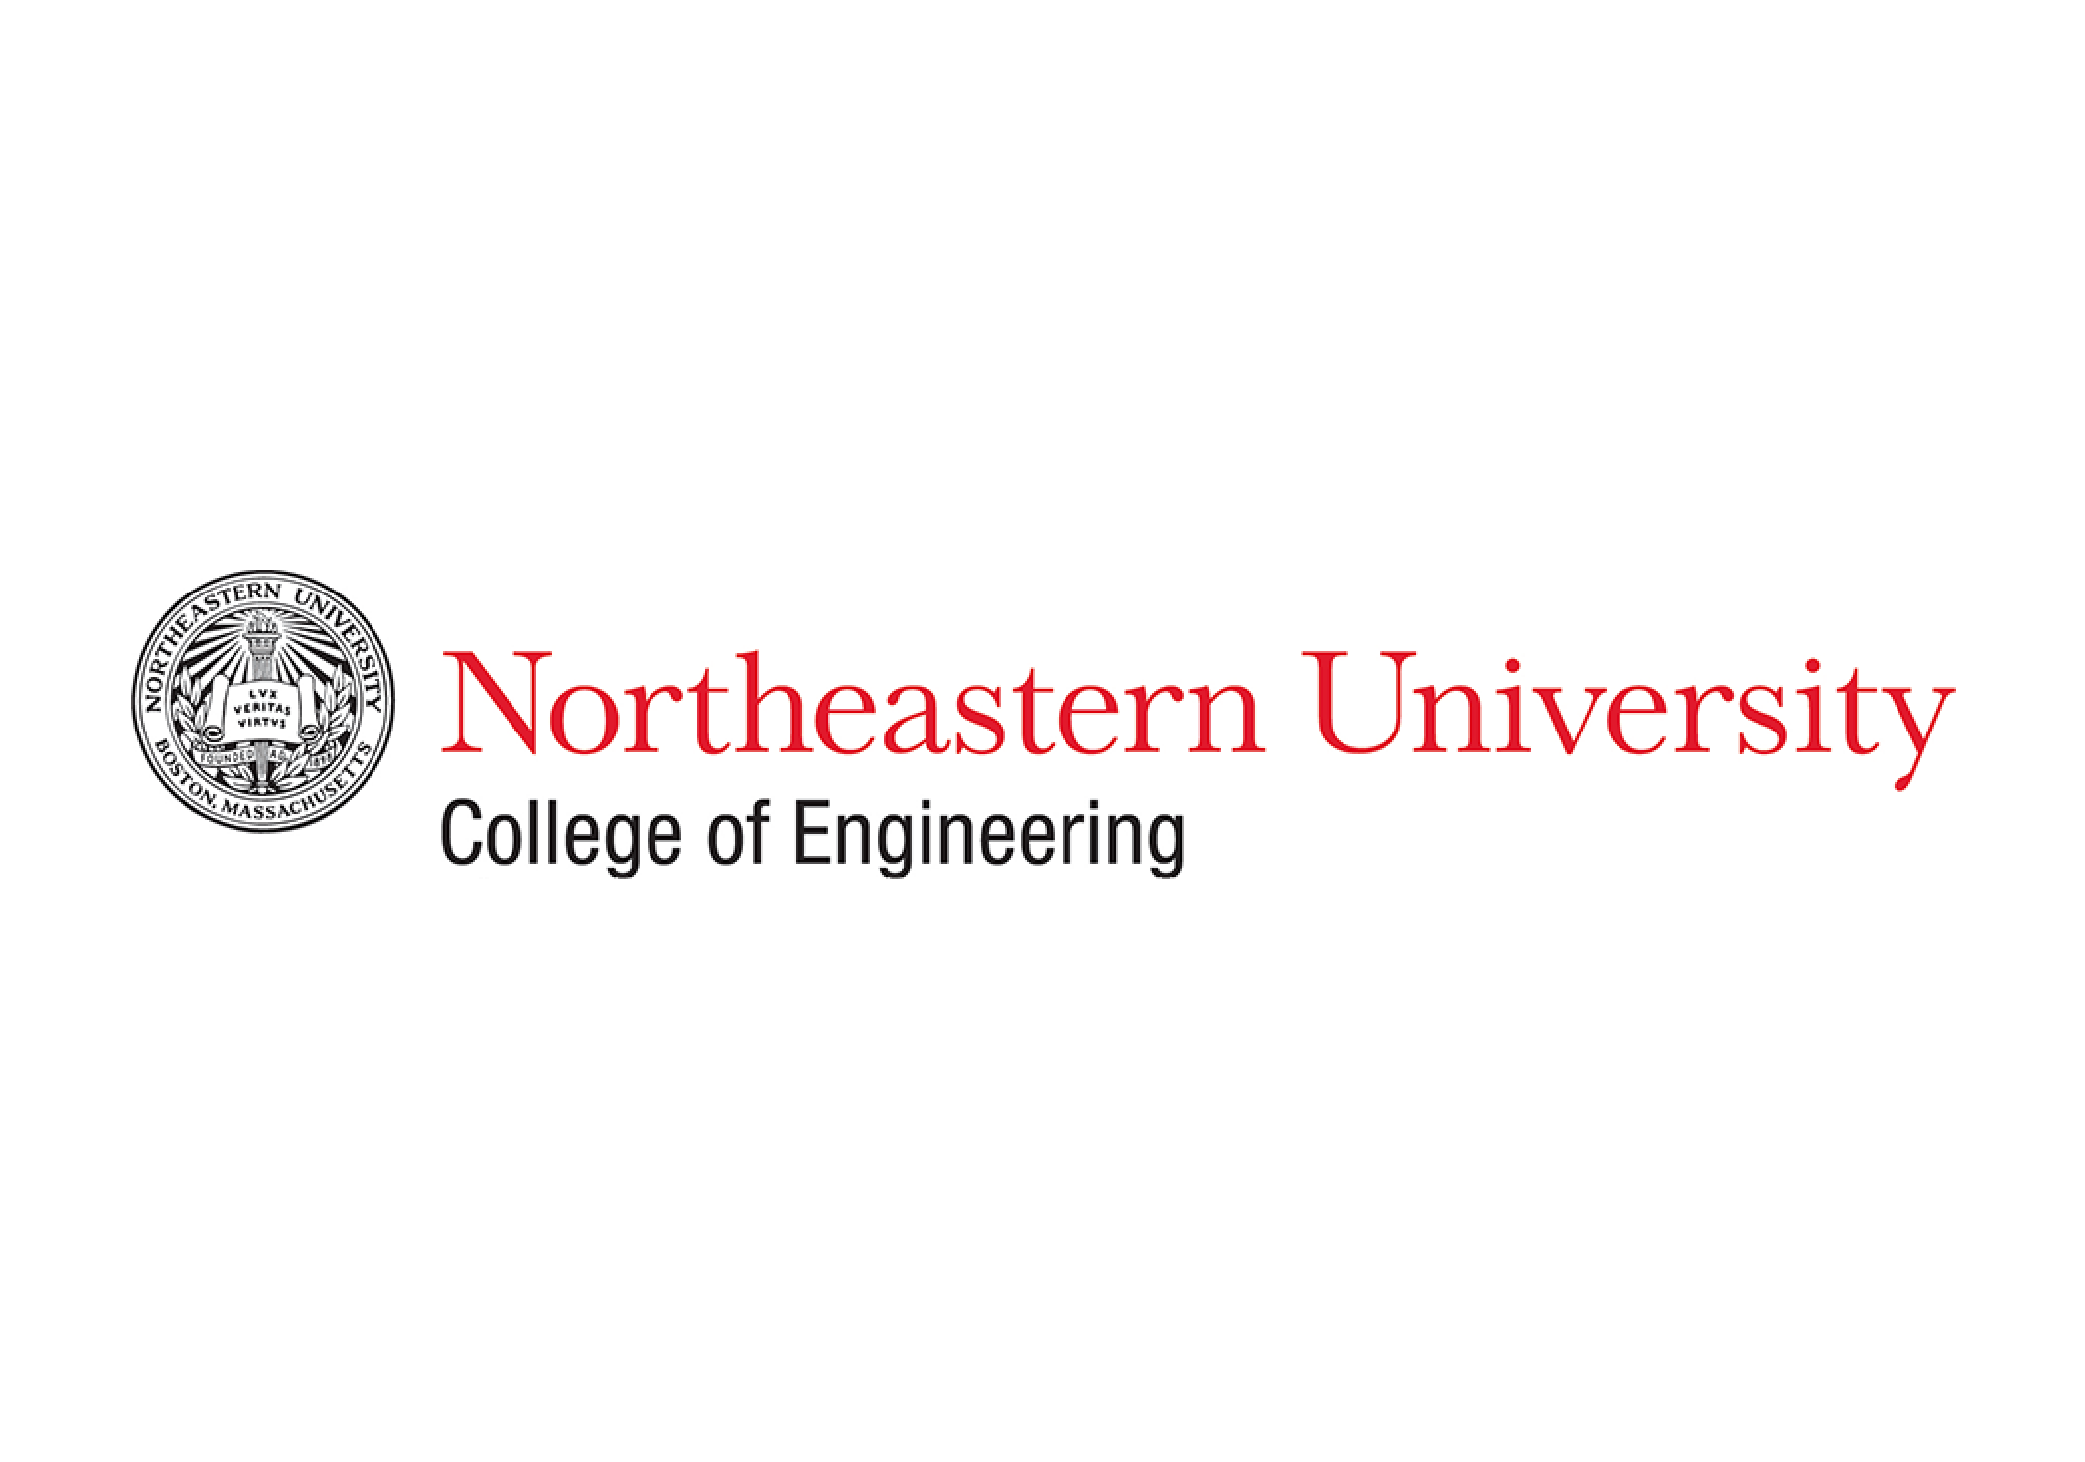 NortheasternUniversity-CollegeofEngineering-01